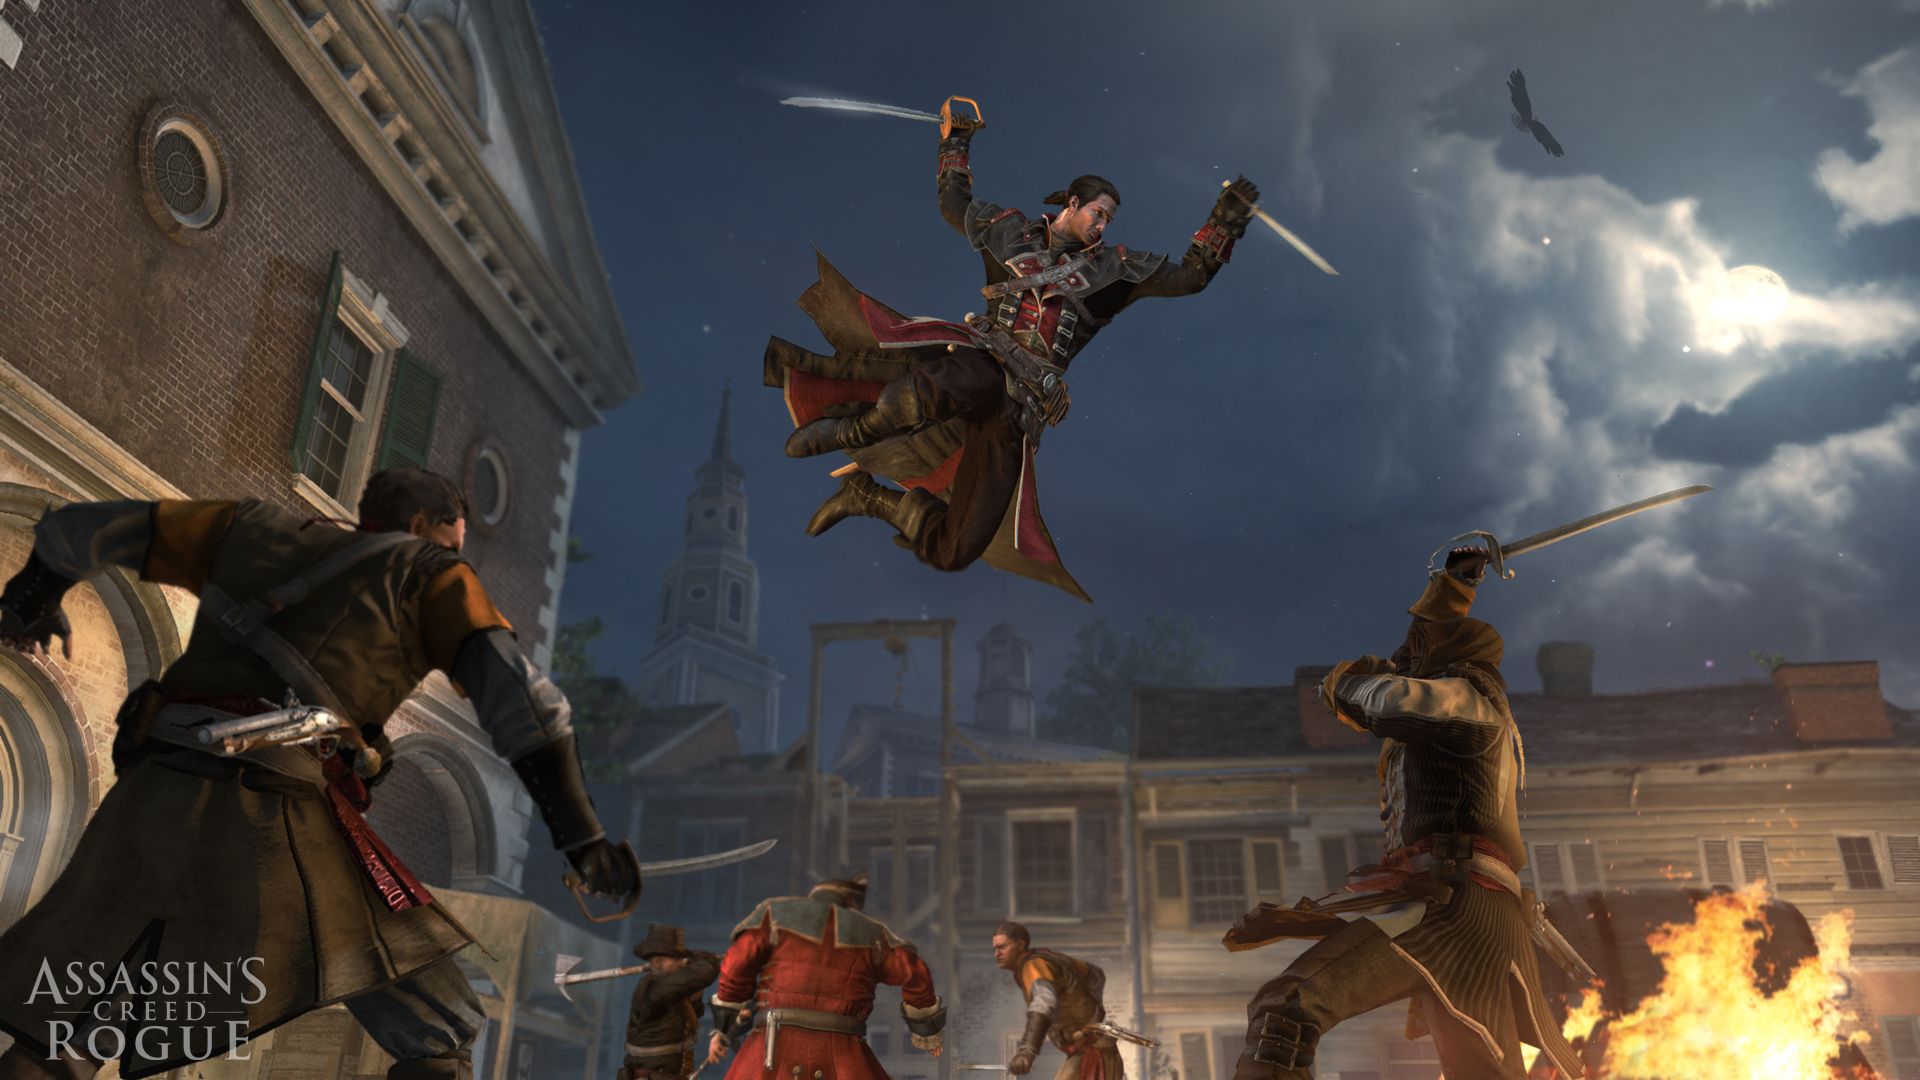 Baixar papel de parede para celular de Assassin's Creed: Vampira, Assassin's Creed, Videogame gratuito.